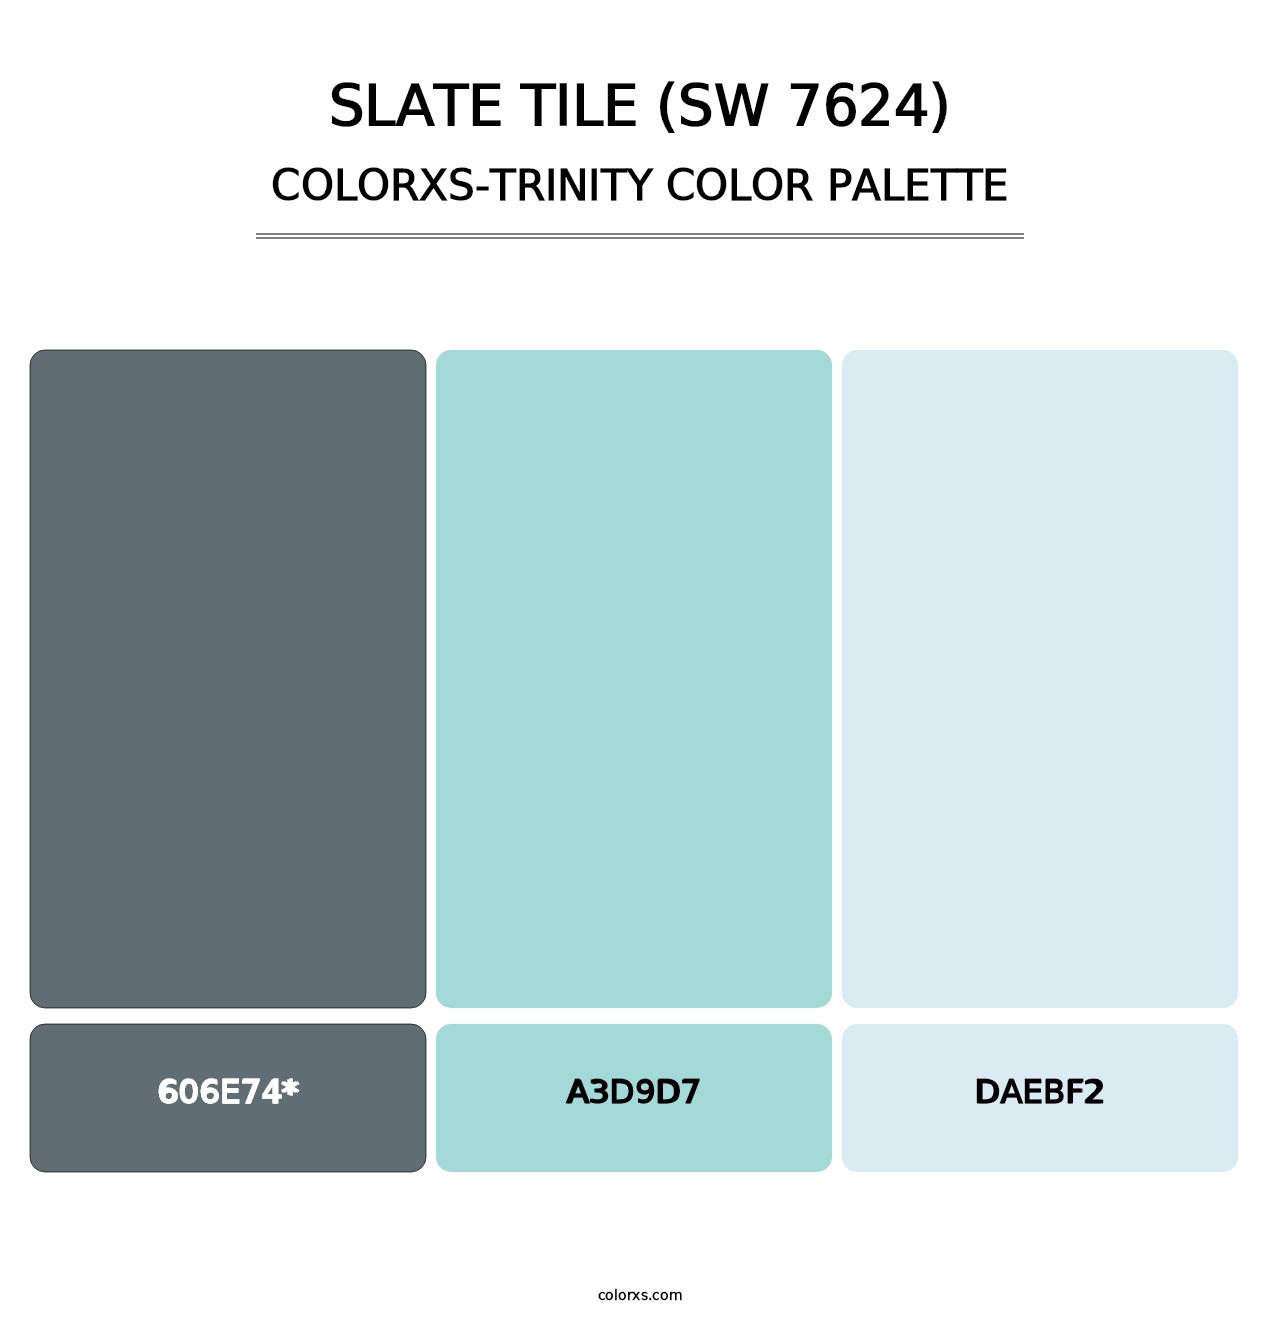 Slate Tile (SW 7624) - Colorxs Trinity Palette